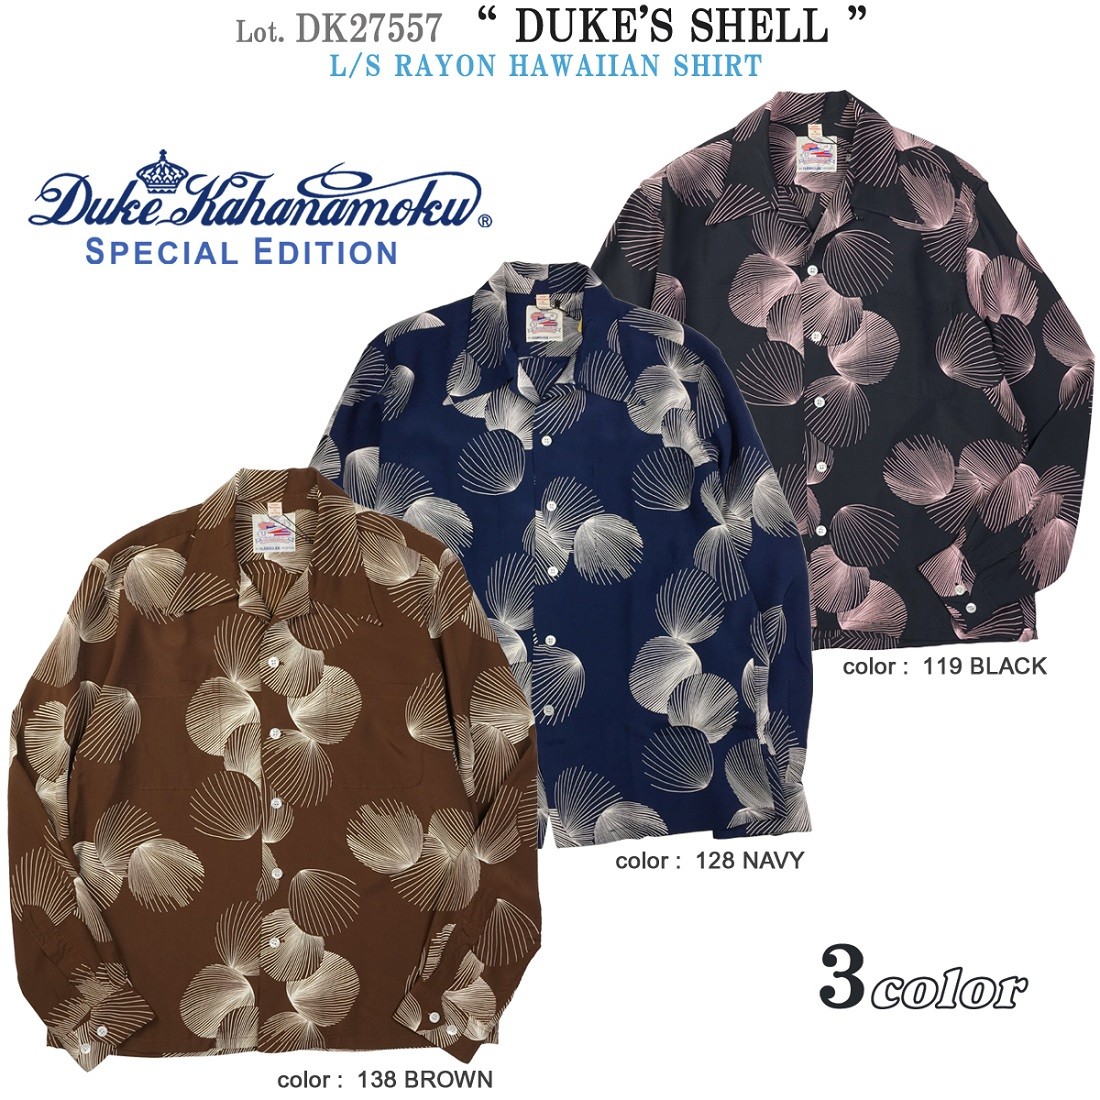 DK27557 デュークカハナモク スペシャルエディション “DUKE'S SHELL” アロハシャツ (サンサーフ SUN SURF) DK27557